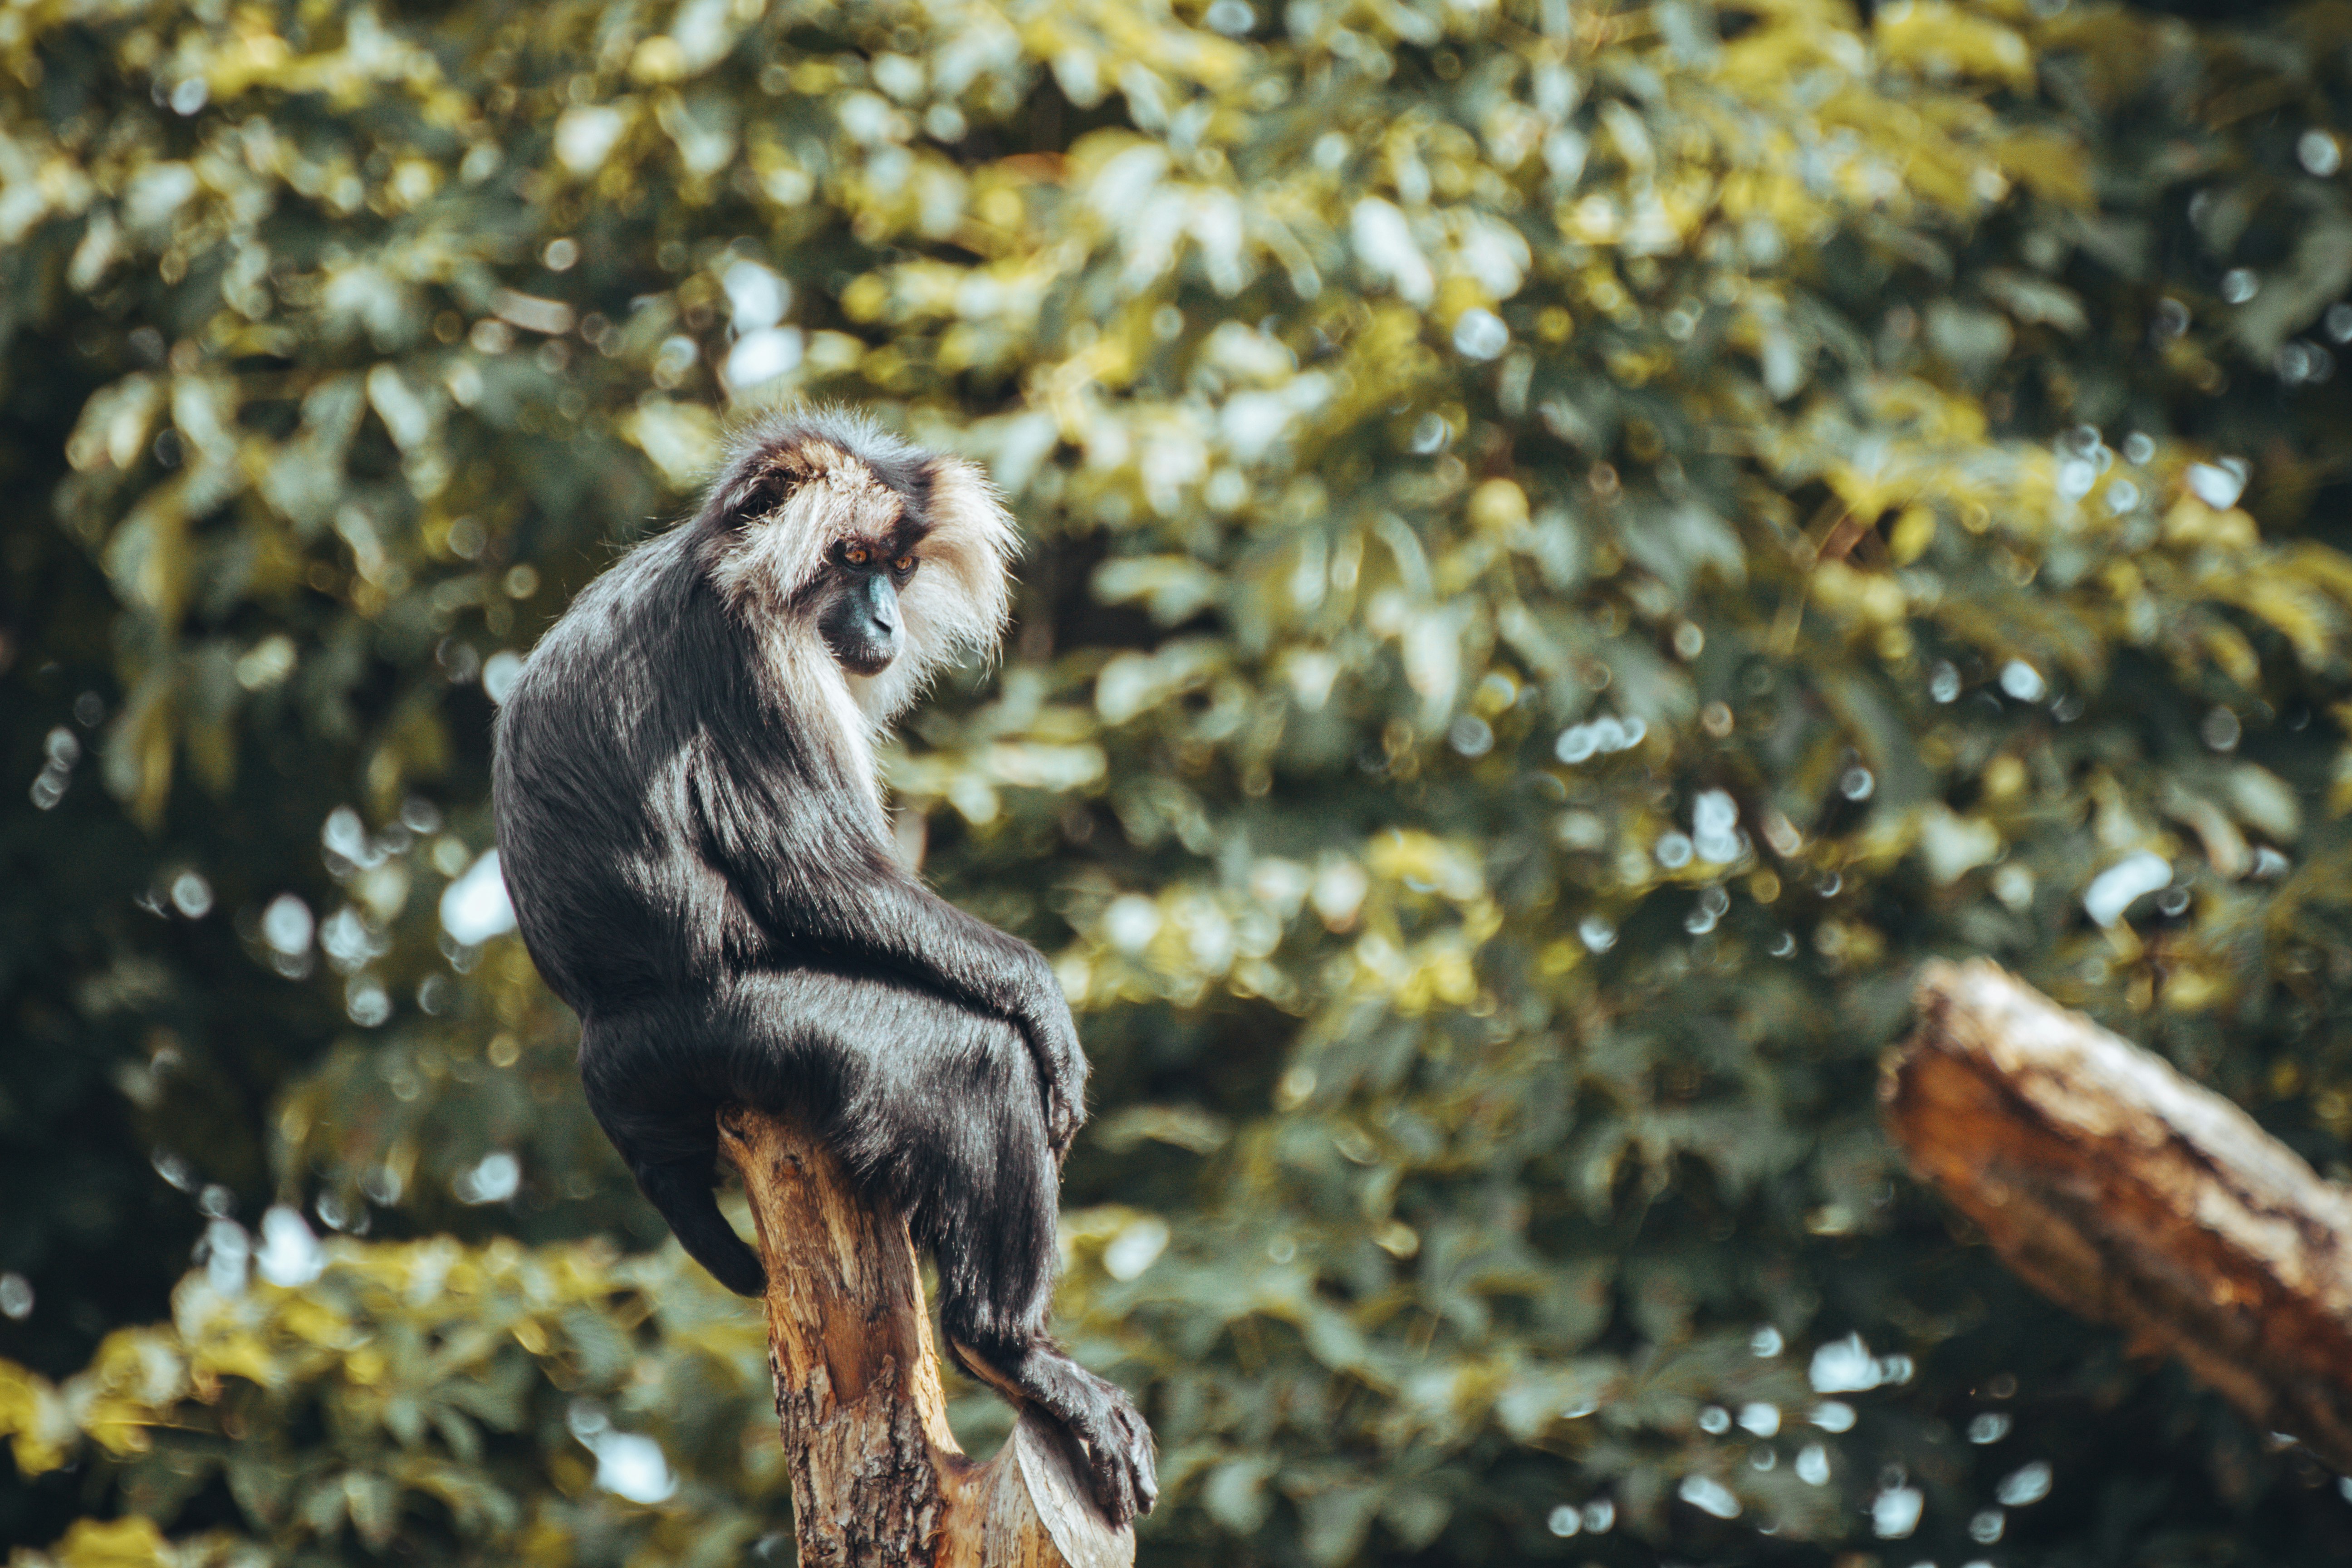 black monkey on brown tree branch during daytime